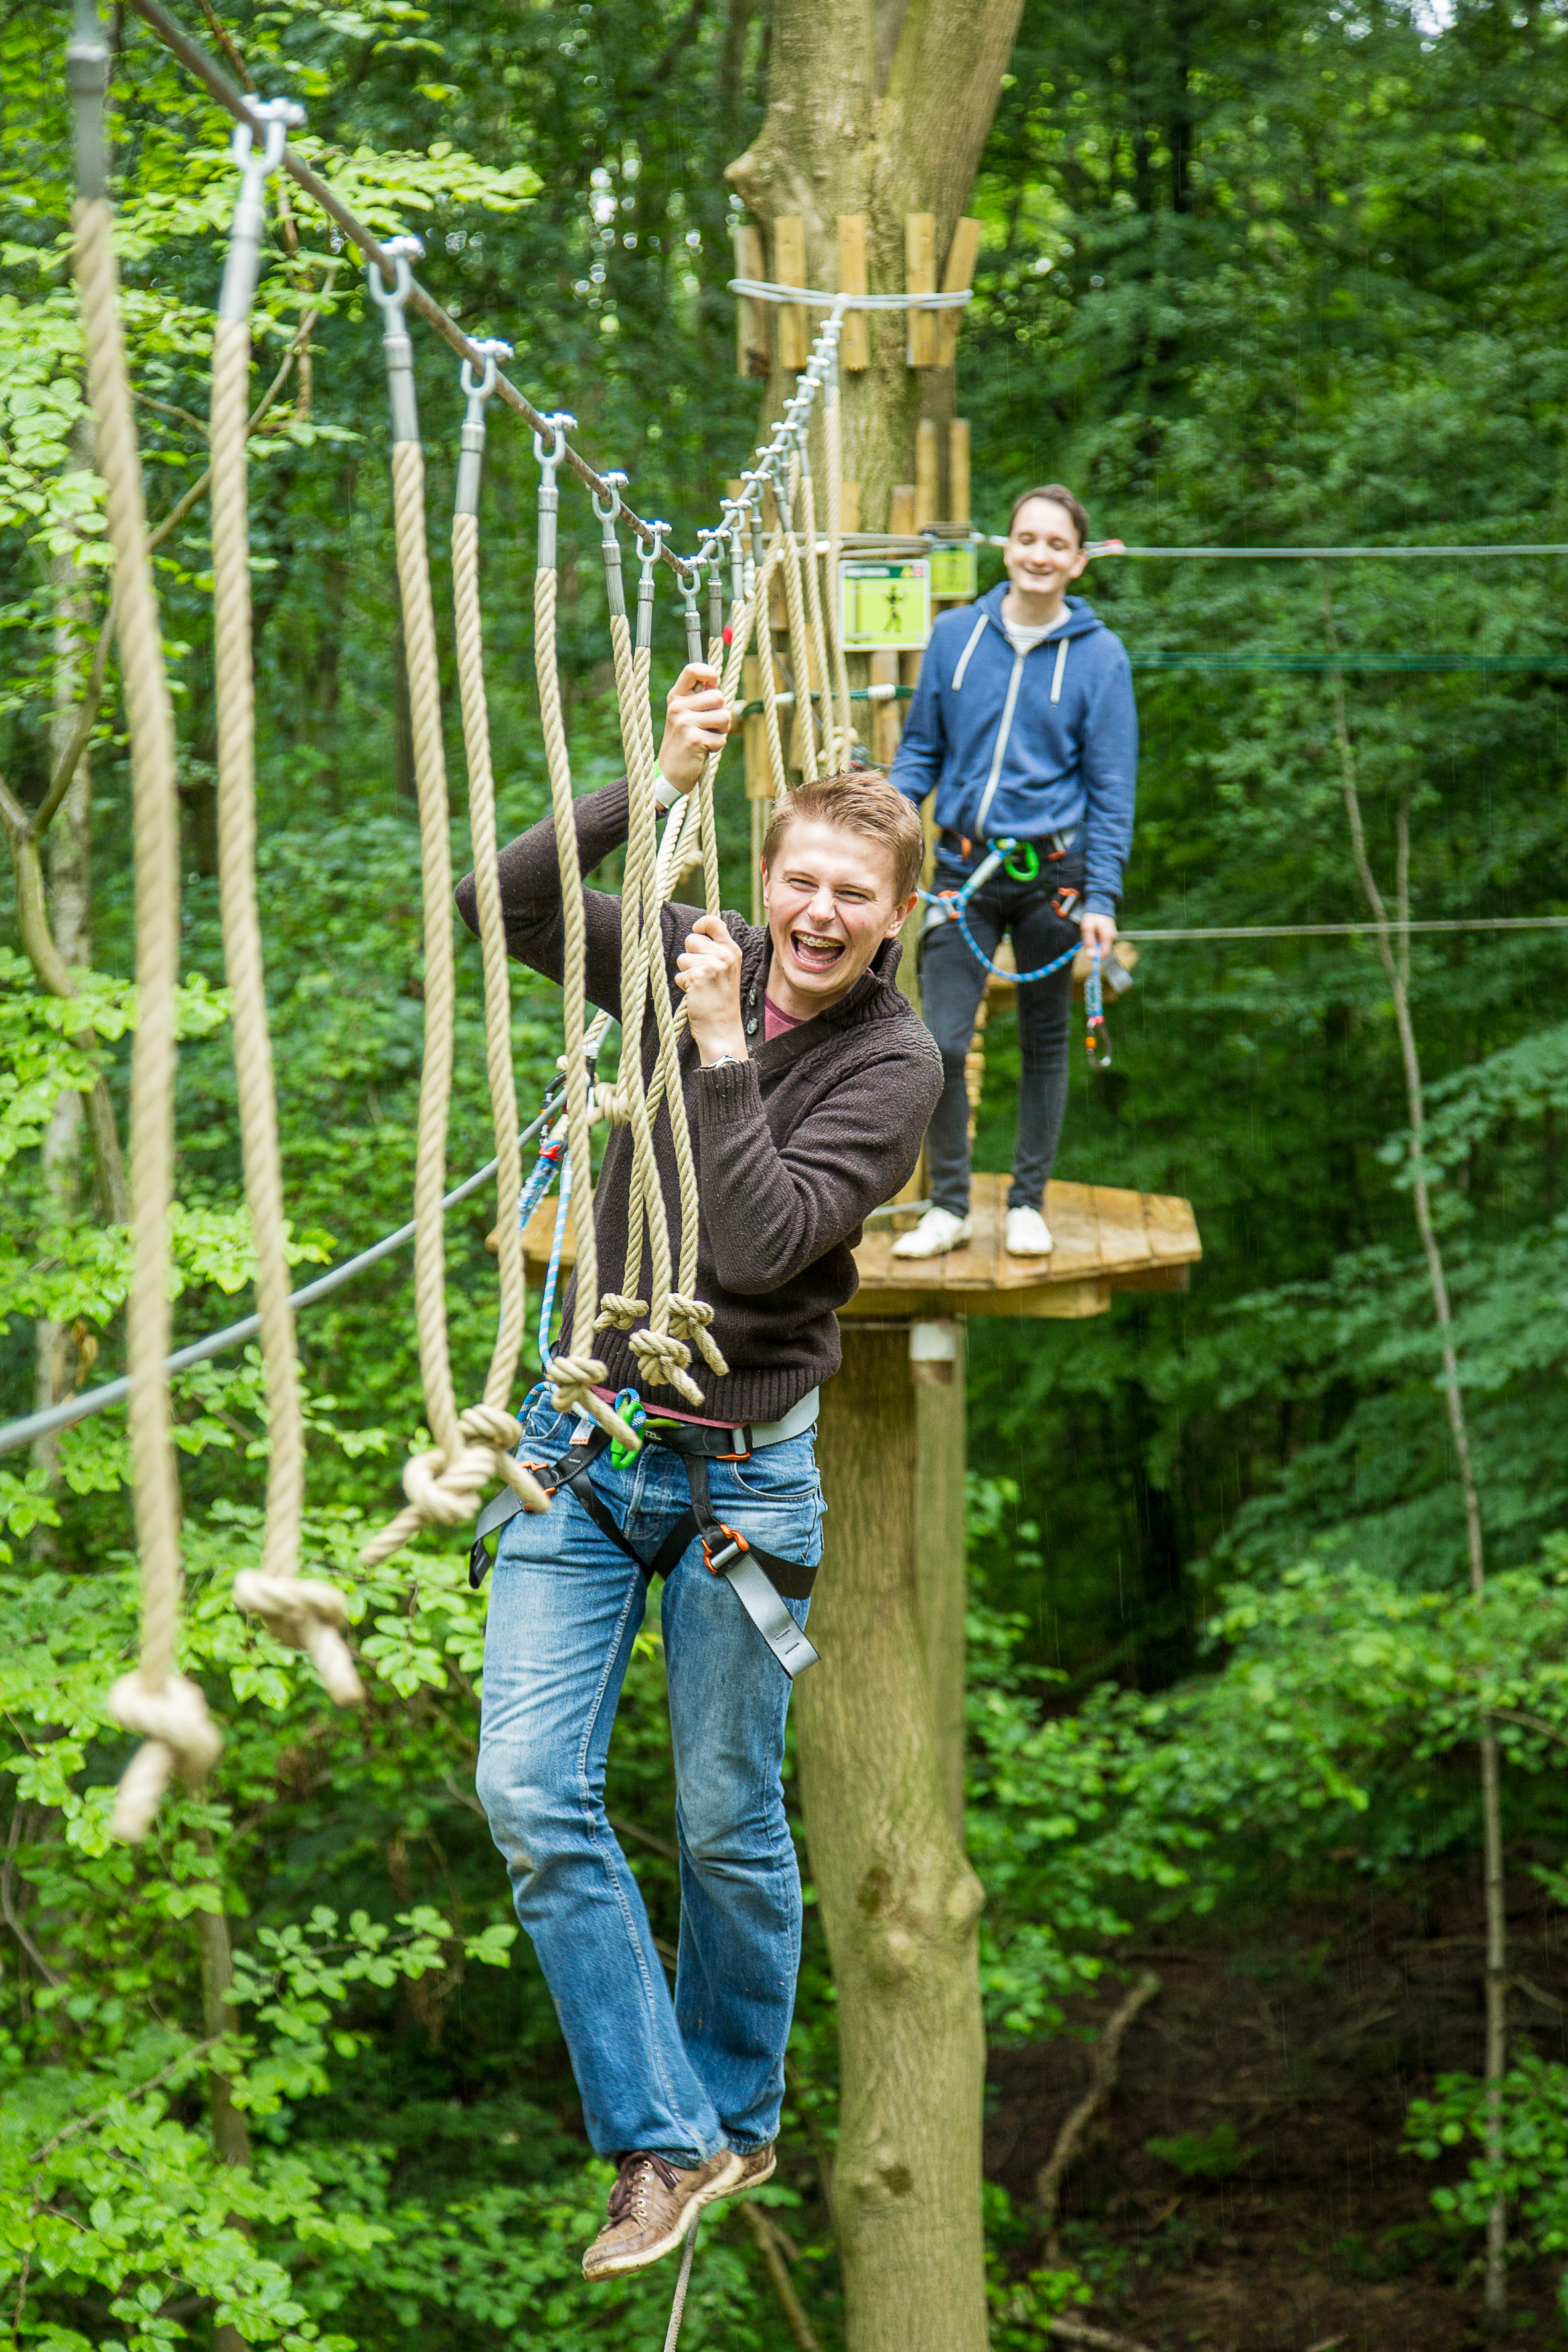 Brand New Go Ape Tree Top Adventure At Chessington World Of Adventures Resort!